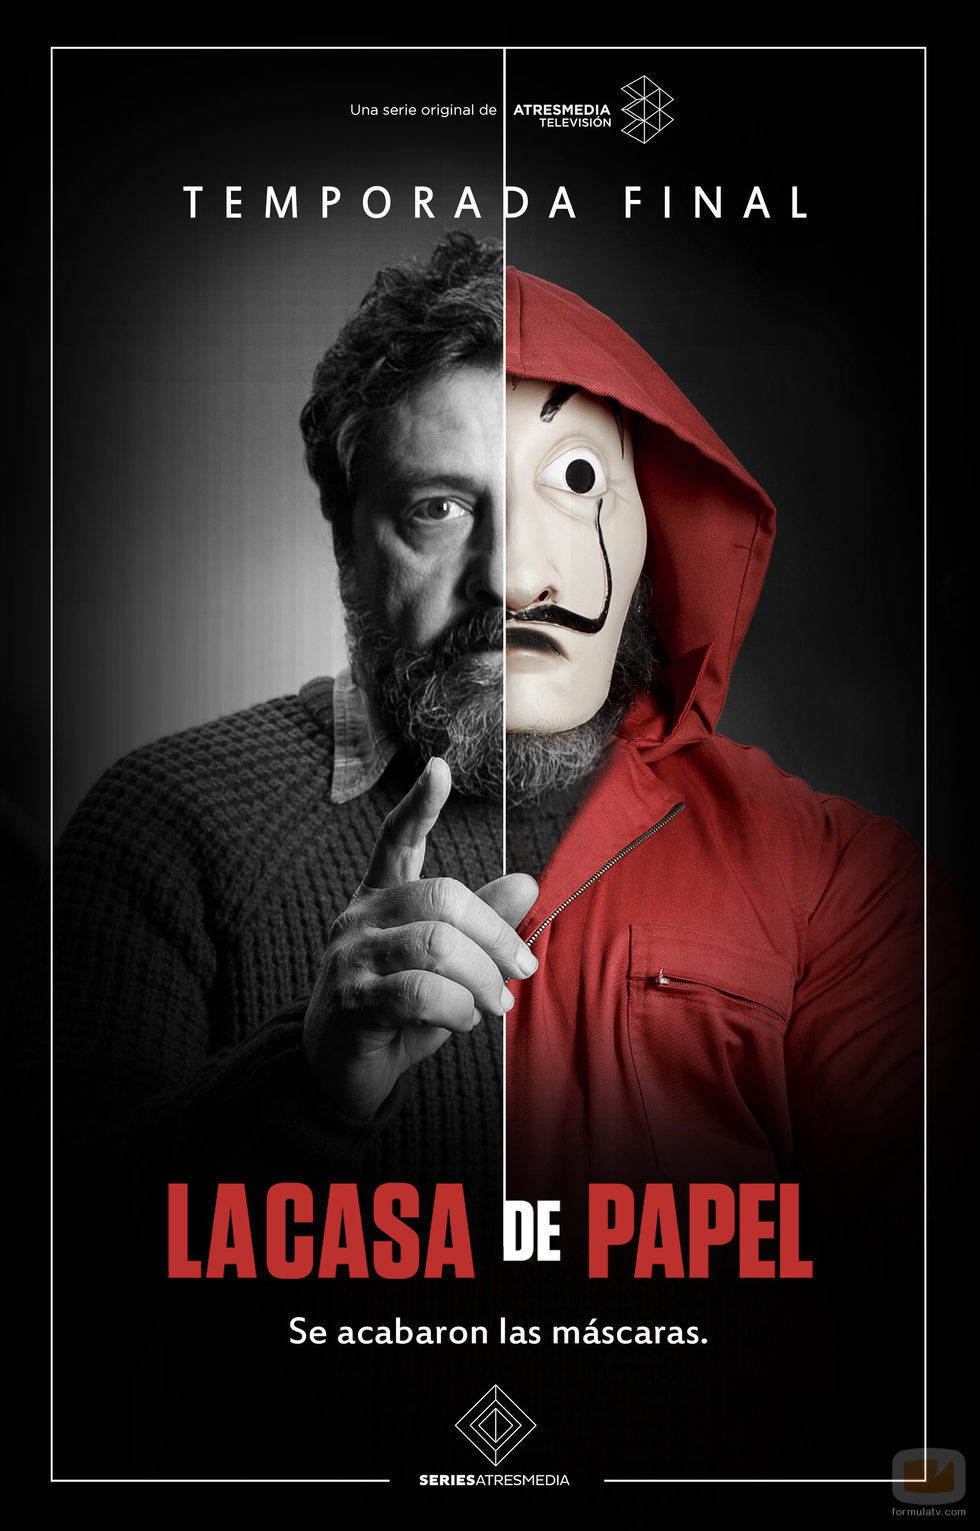 Paco Tous, Moscú en 'La Casa de Papel', protagoniza un póster de la temporada final